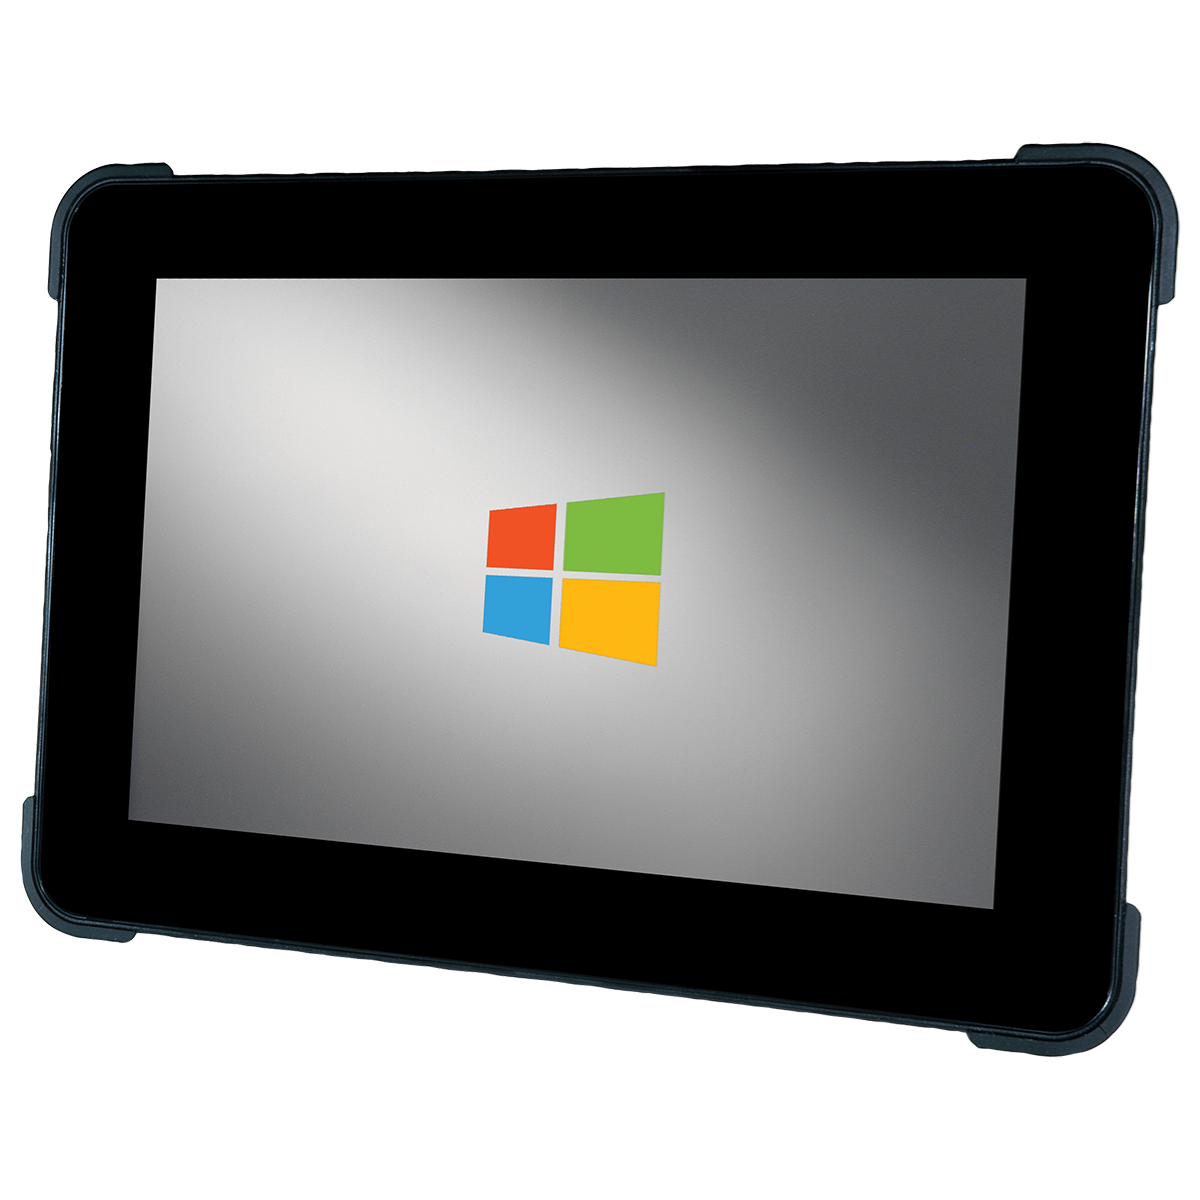 Hisense HM628N Rugged Windows POS Tablet